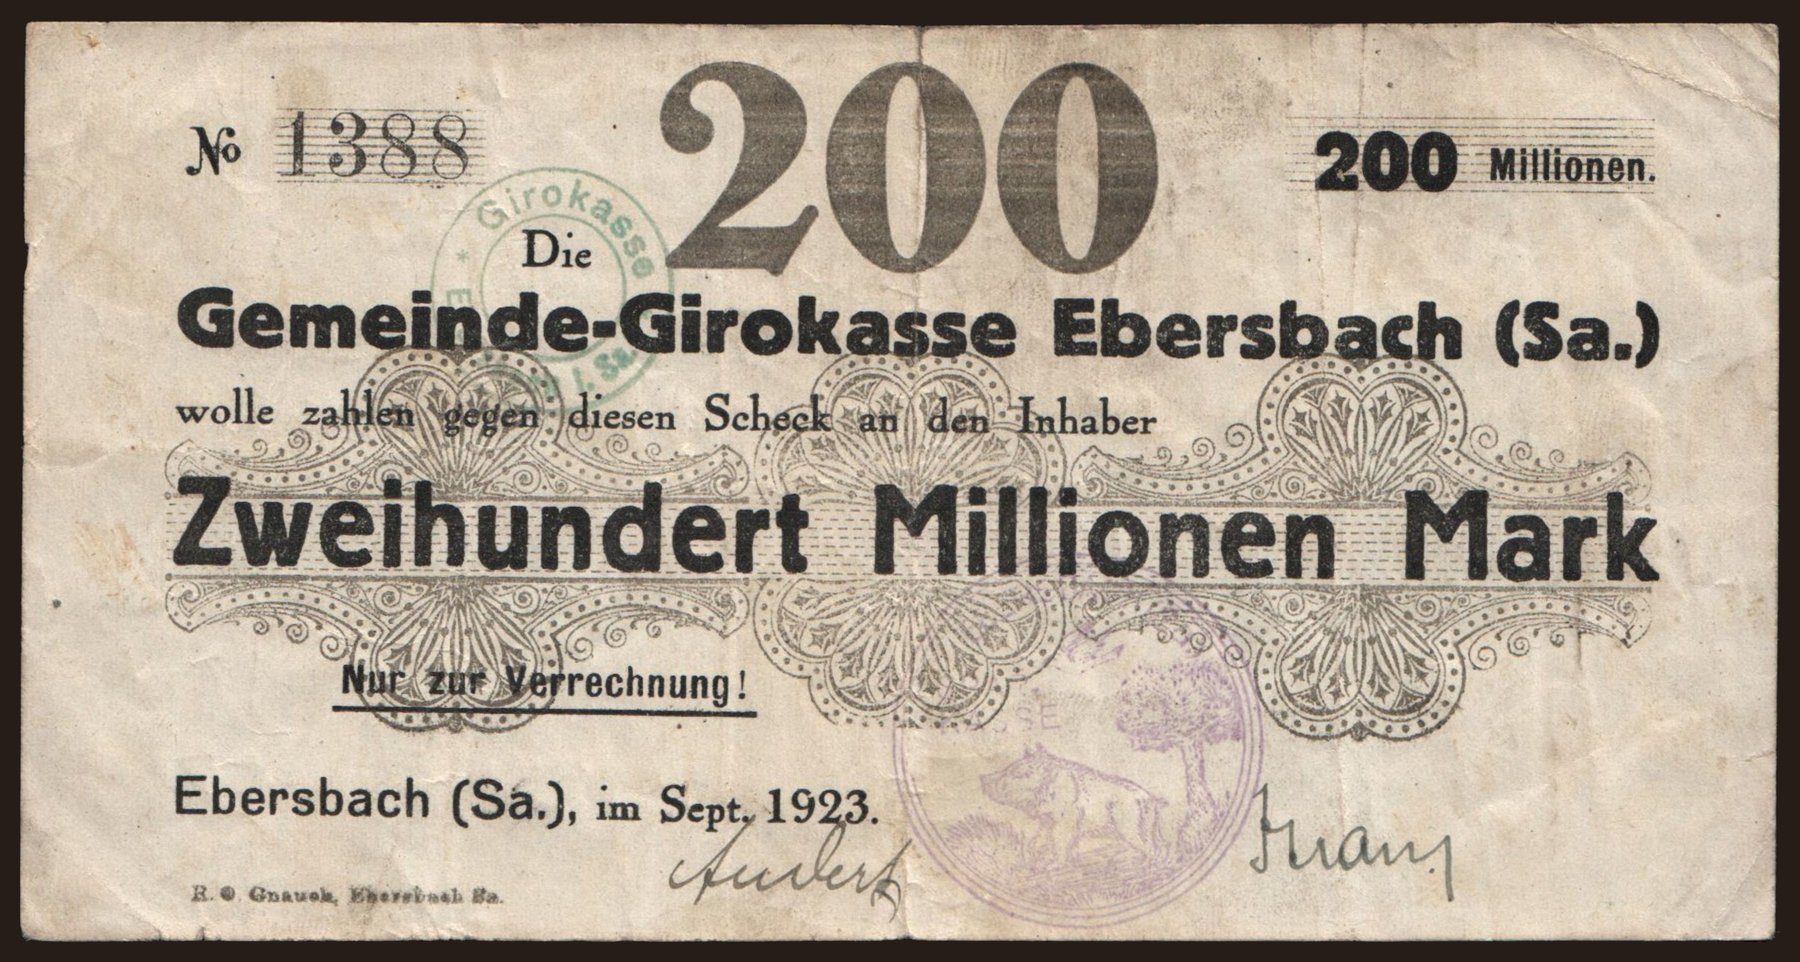 Ebersbach/ Gemeinde Girokasse, 200.000.000 Mark, 1923